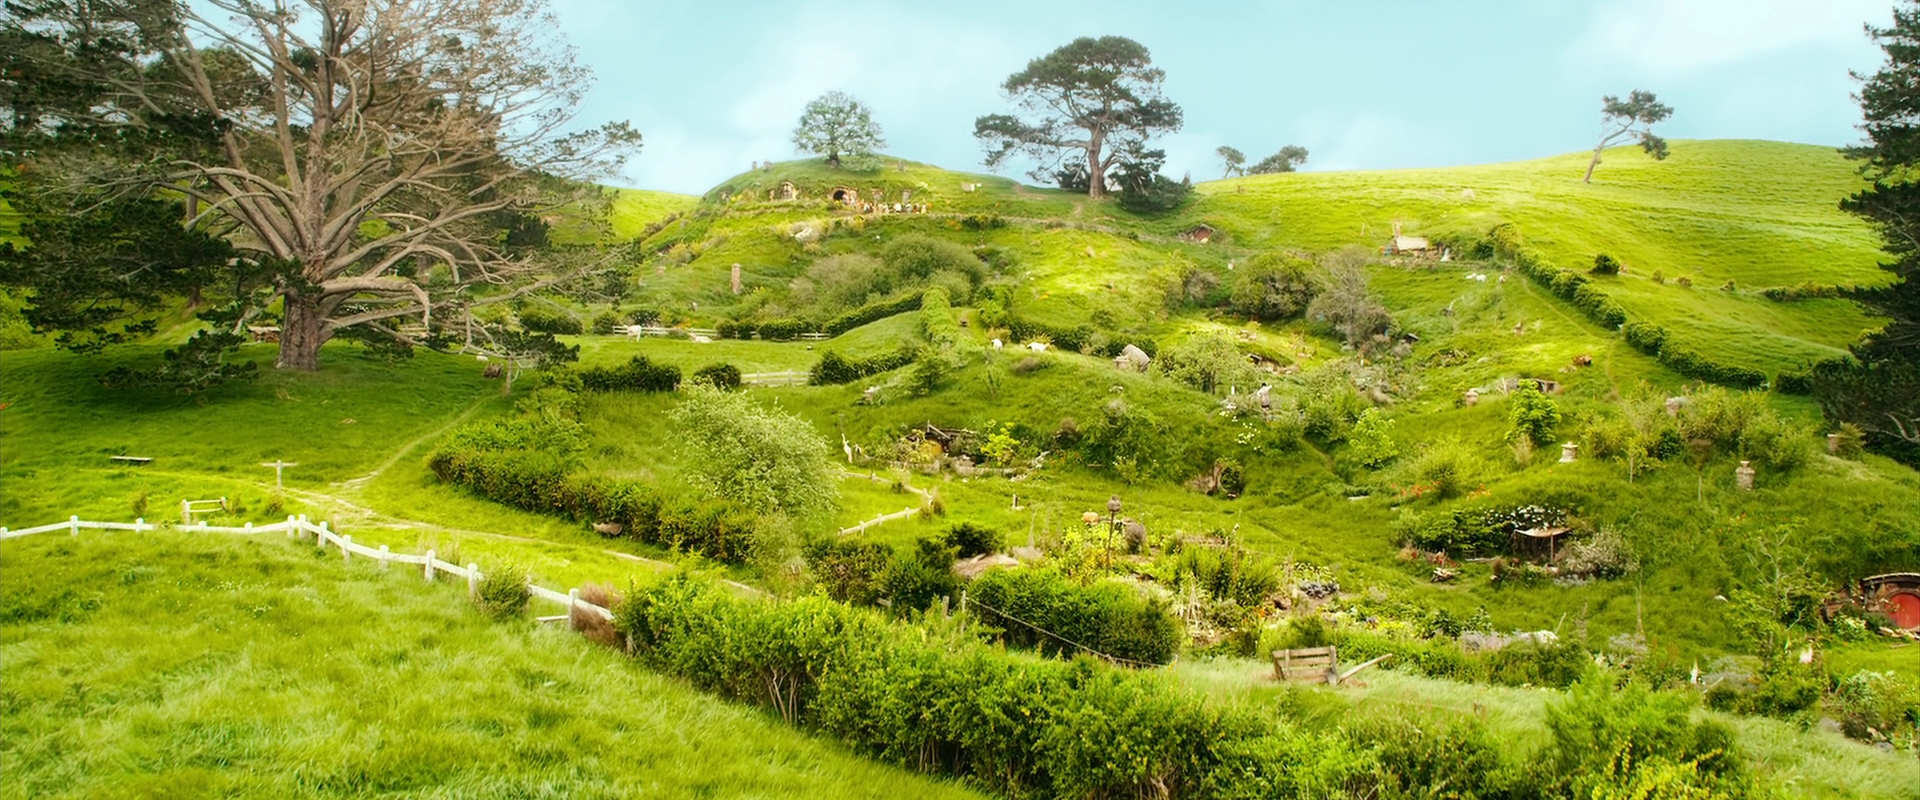 Amazing Hobbiton Pictures & Backgrounds